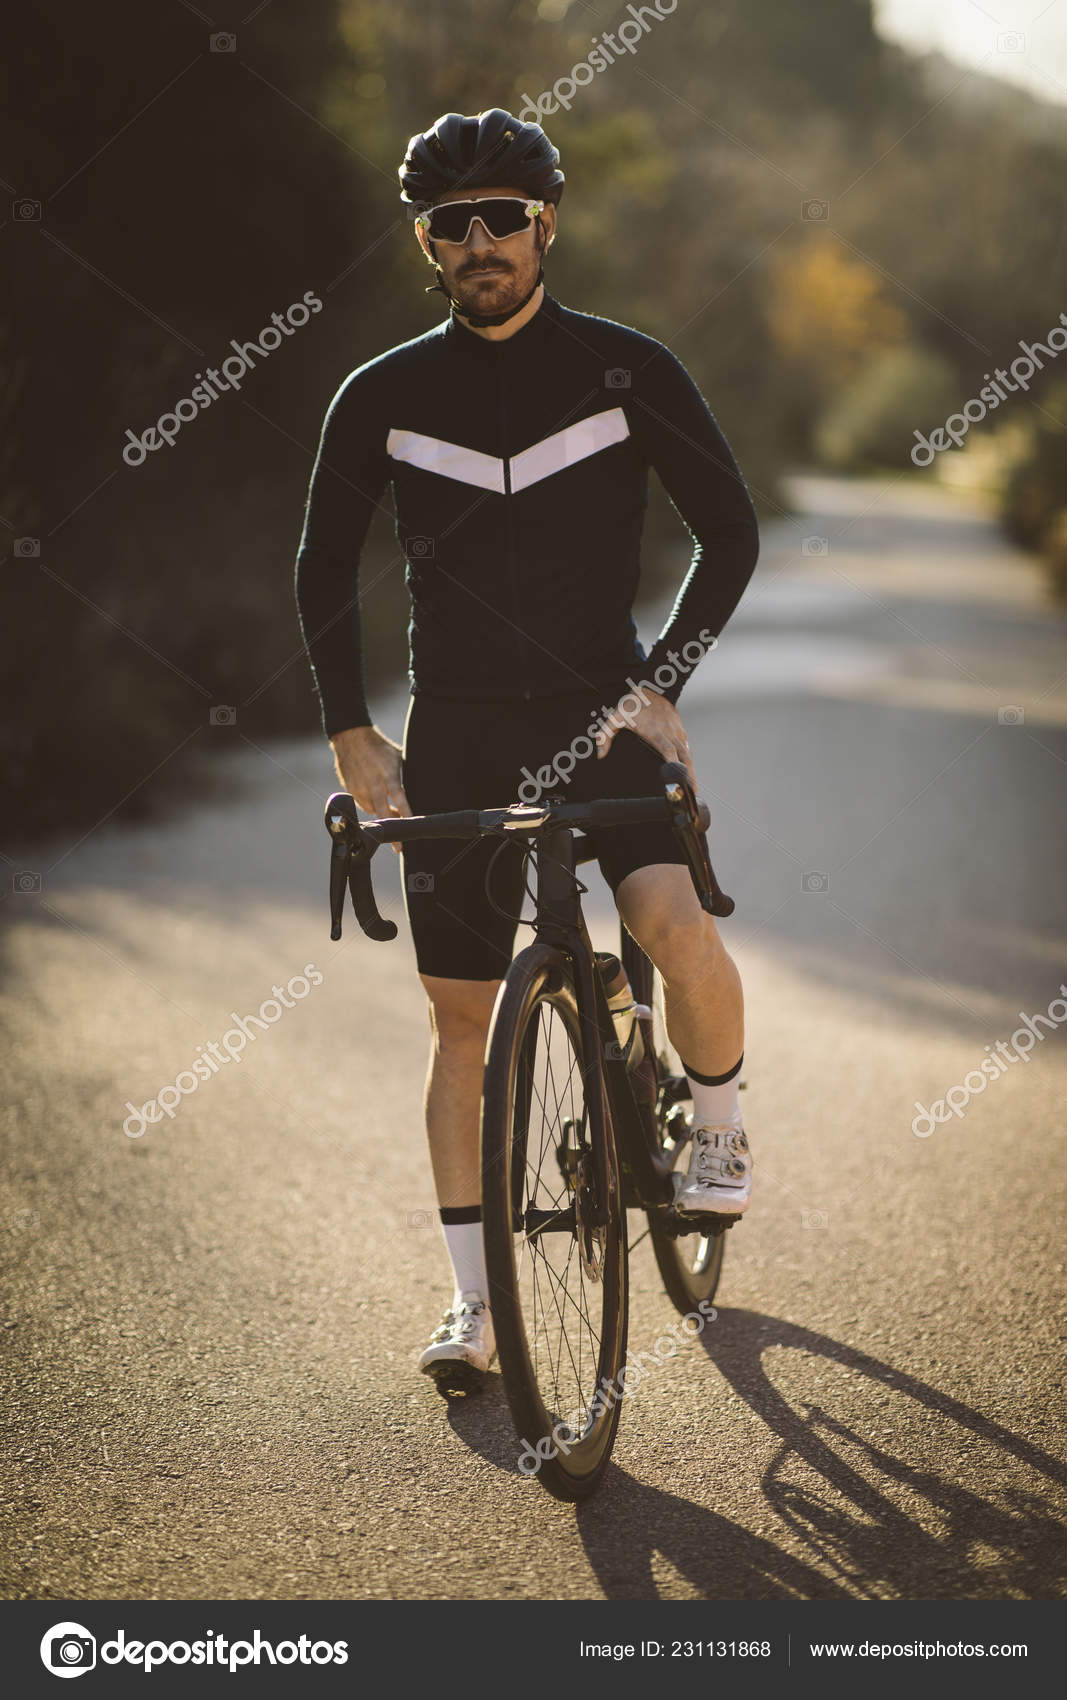 🔥 Models Bike Pose Photography HD Photoshoot Stylish Free Download